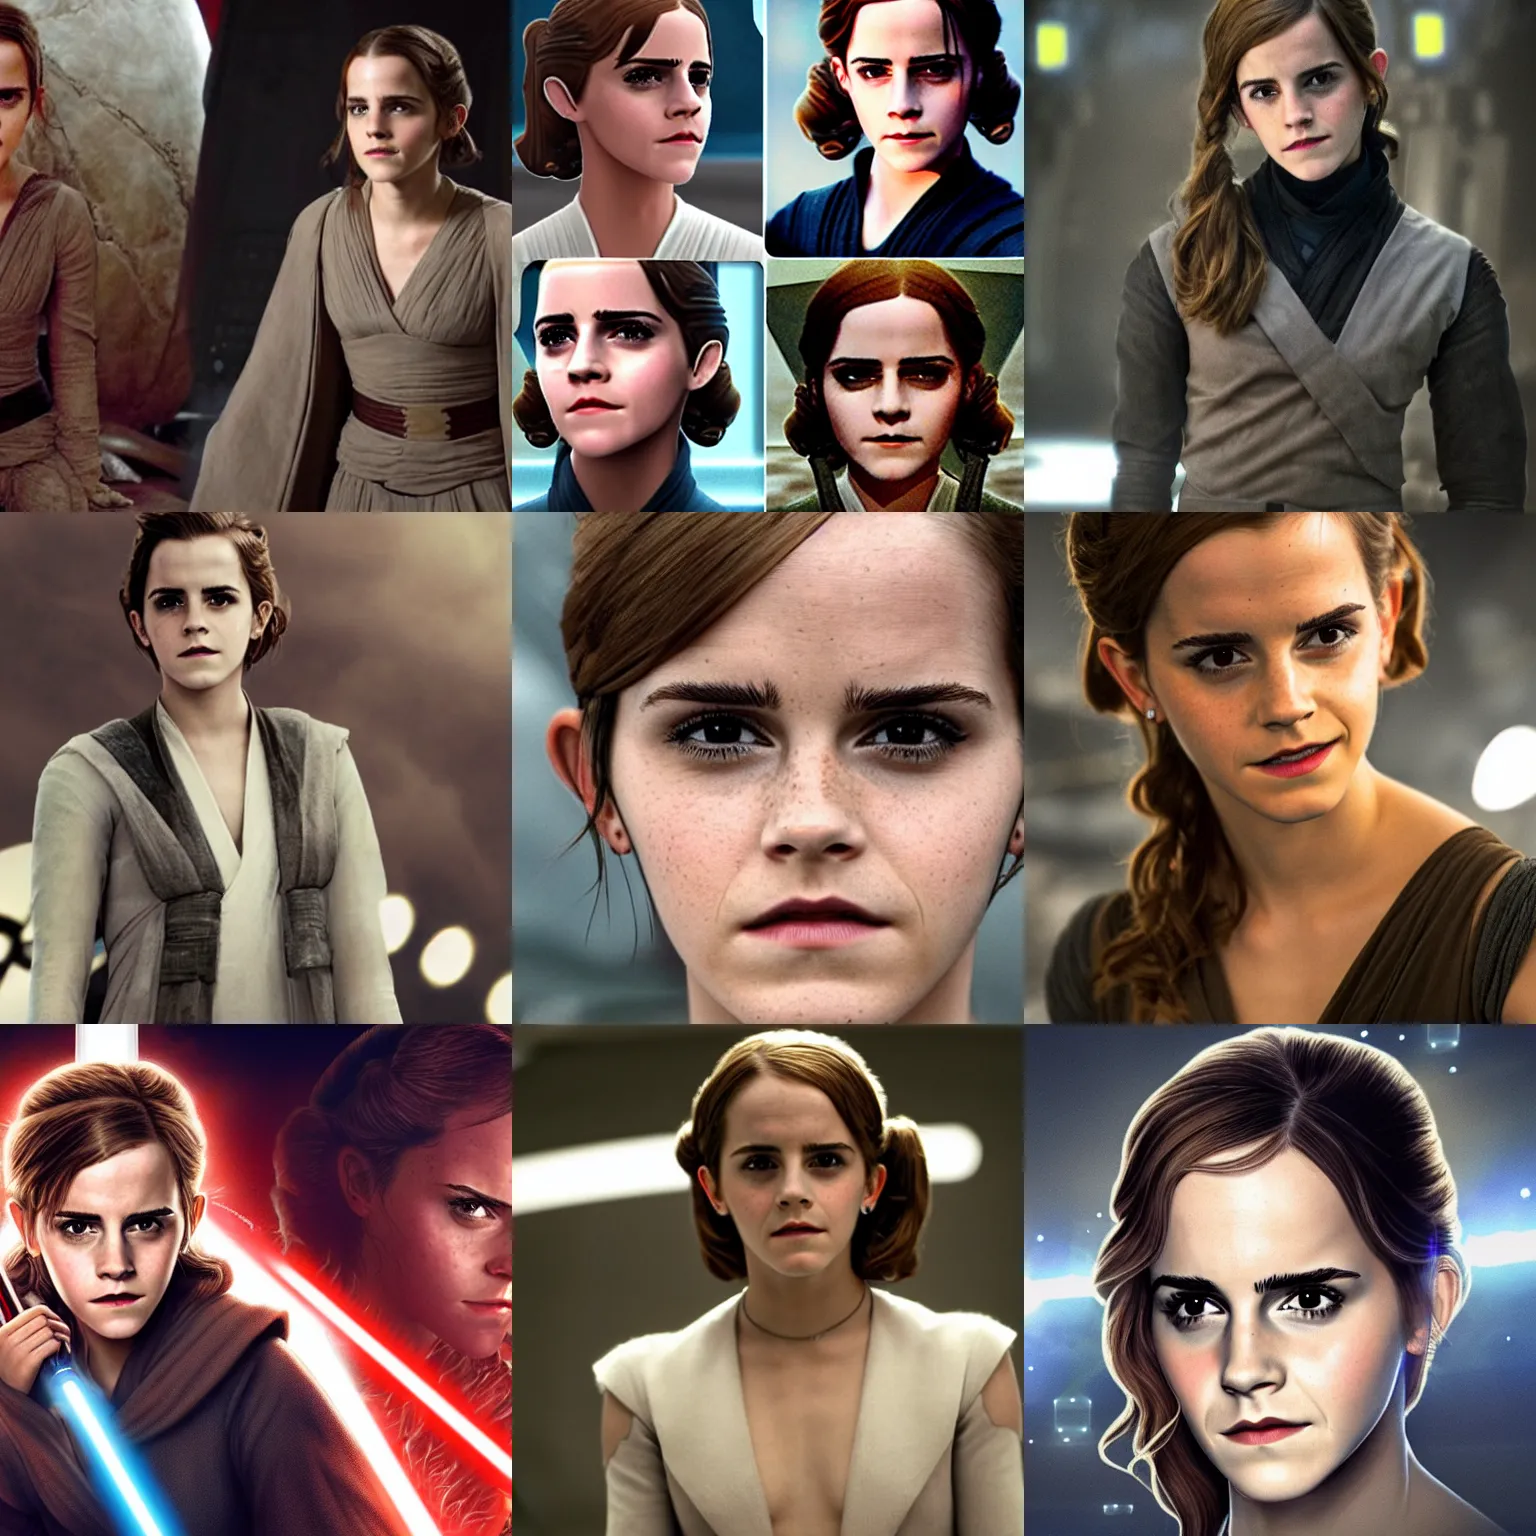 Prompt: Emma Watson in Star Wars Series